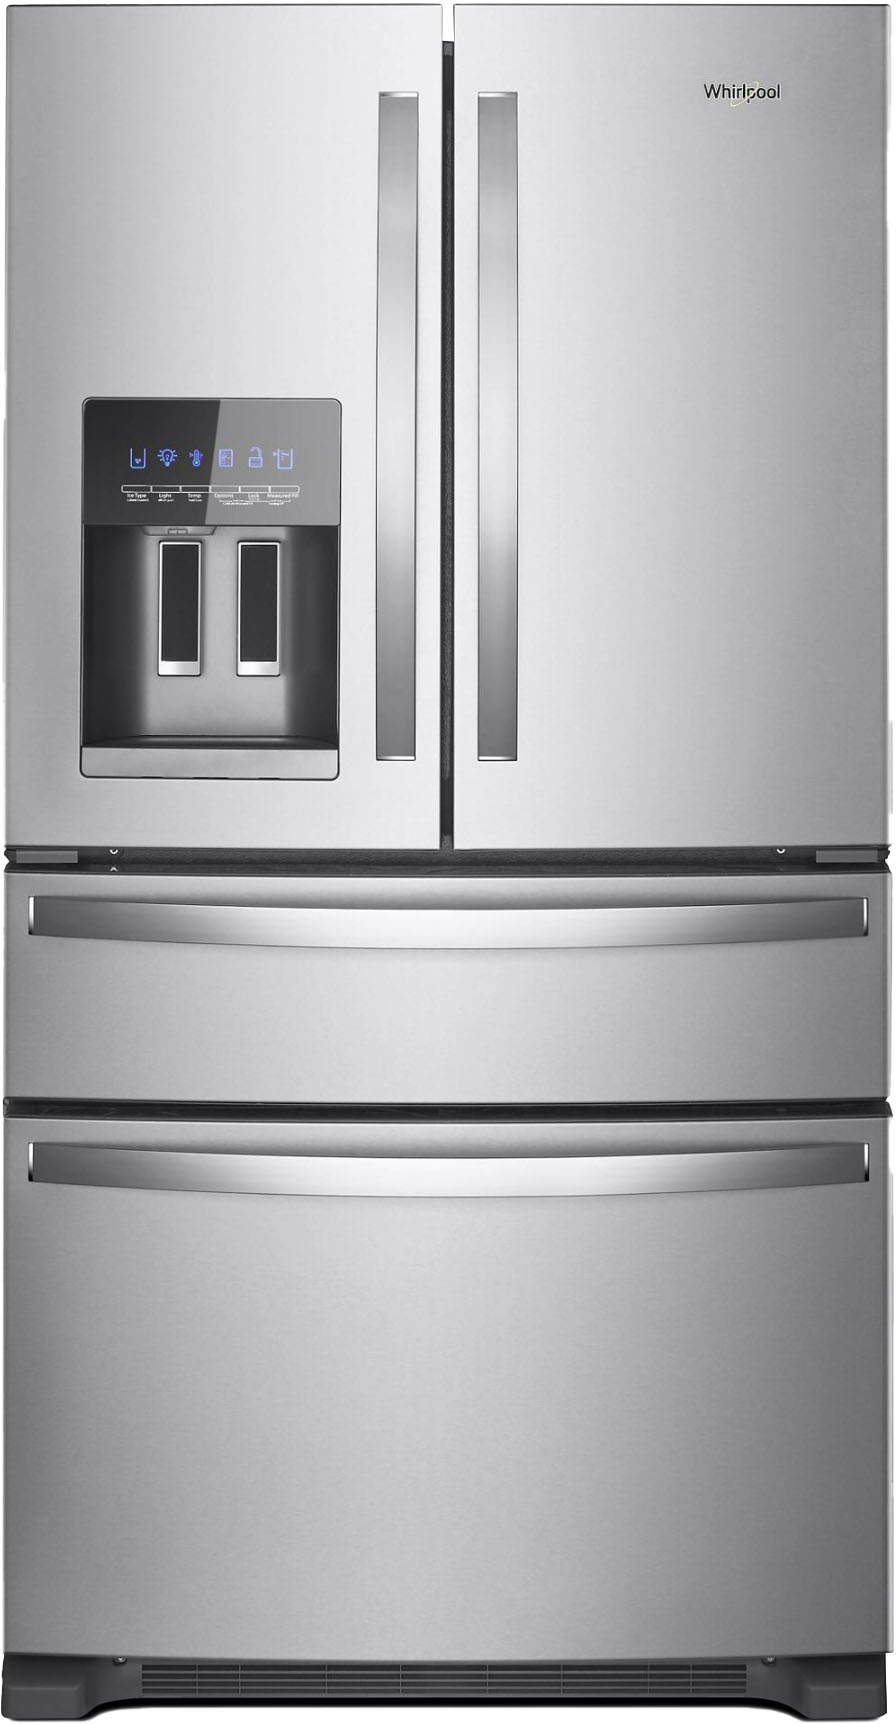 Whirlpool 24.5 Cu. Ft. 4-Door French Door Refrigerator Stainless steel Best Buy Stainless Steel Refrigerator